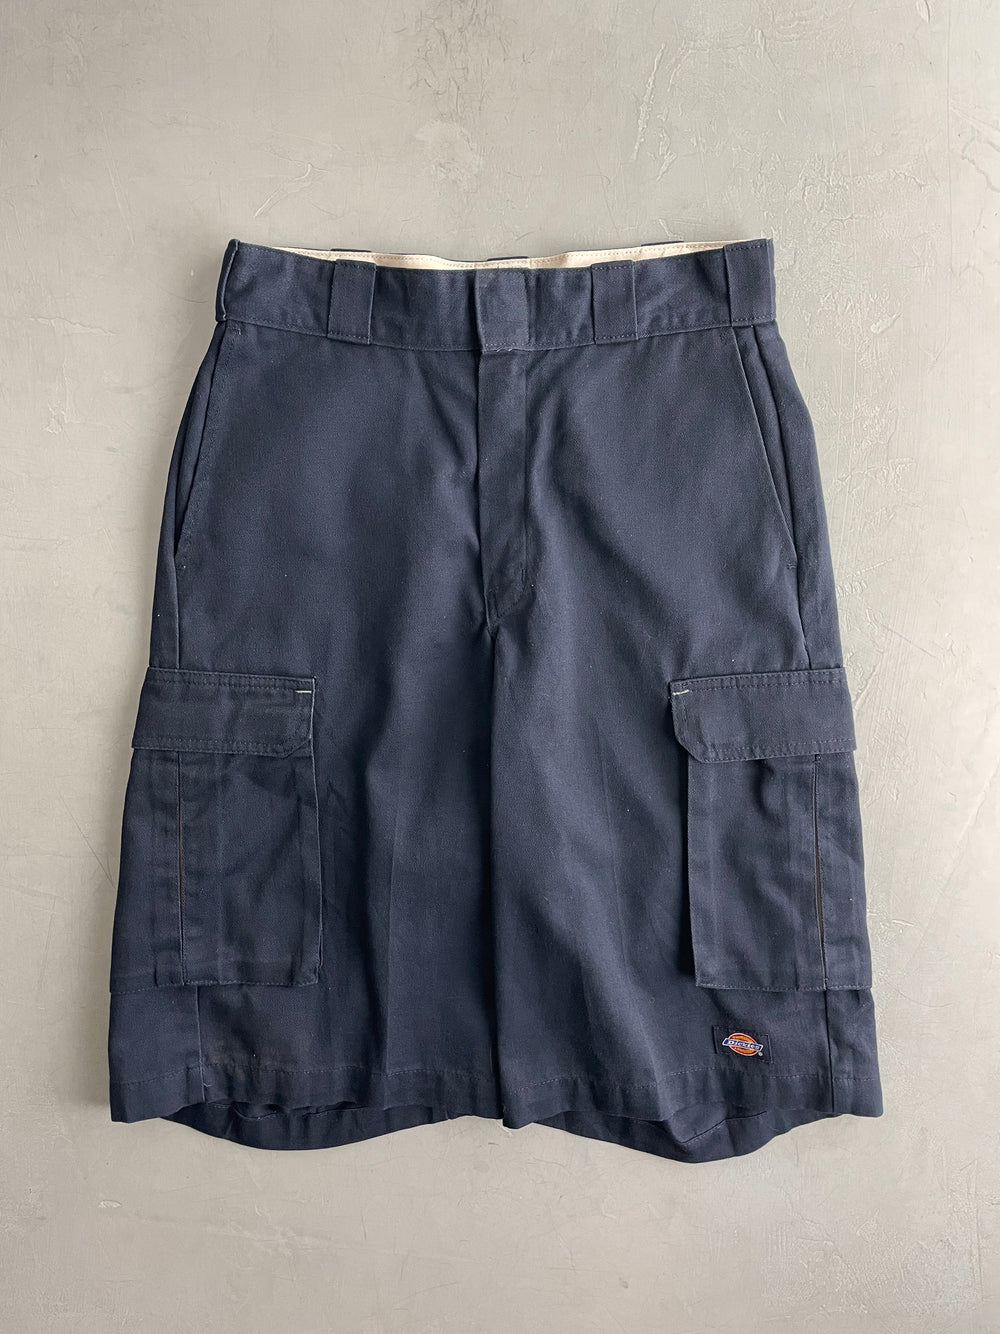 Dickies Cargo Shorts [29"]